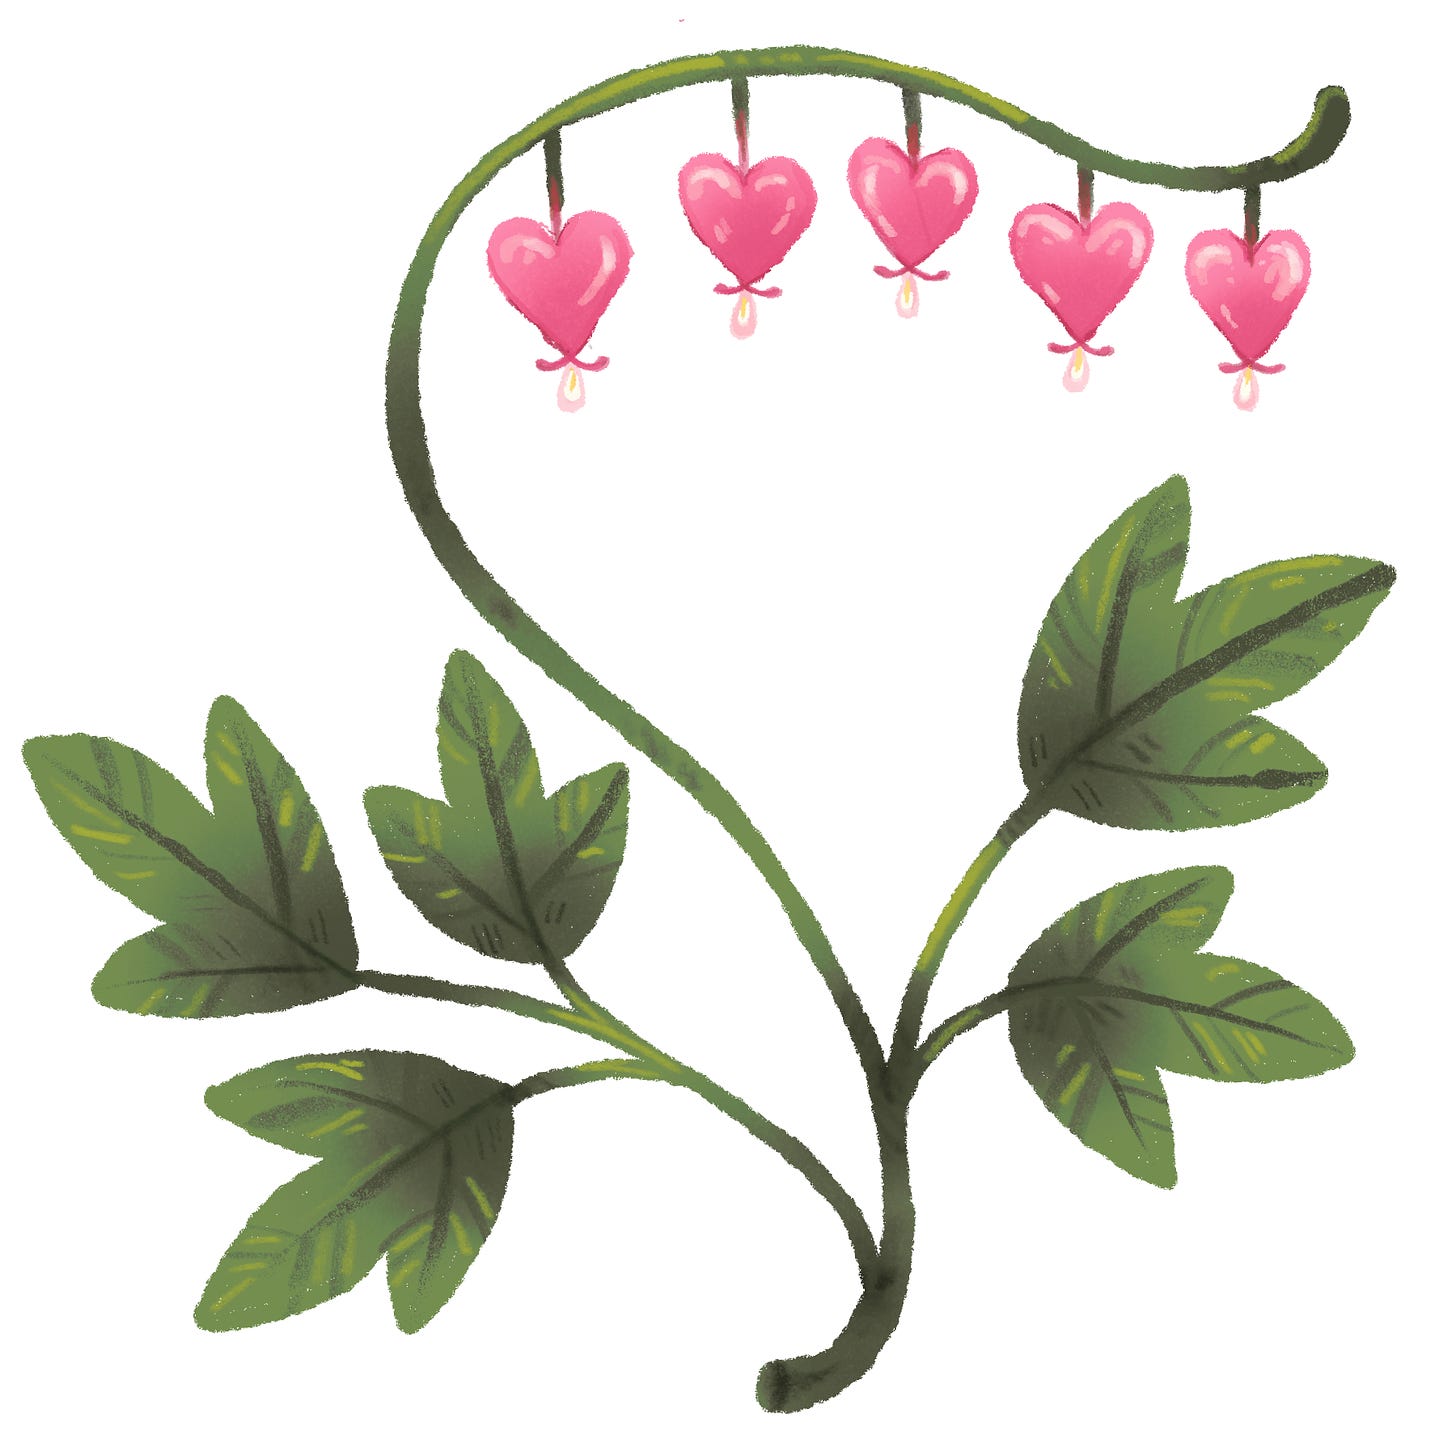 A handdrawn digital illustration of a stylized bleeding heart flower.